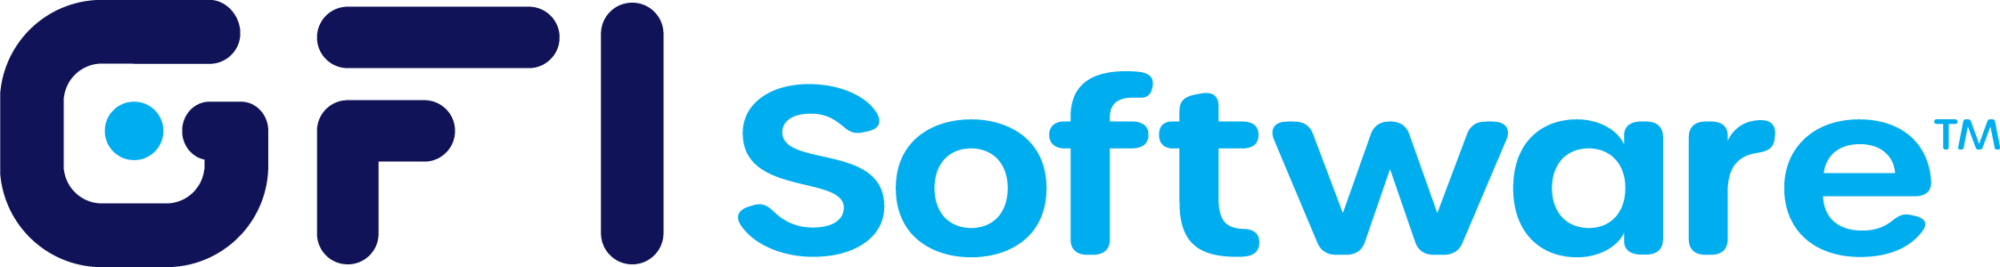 logo-gfi-software